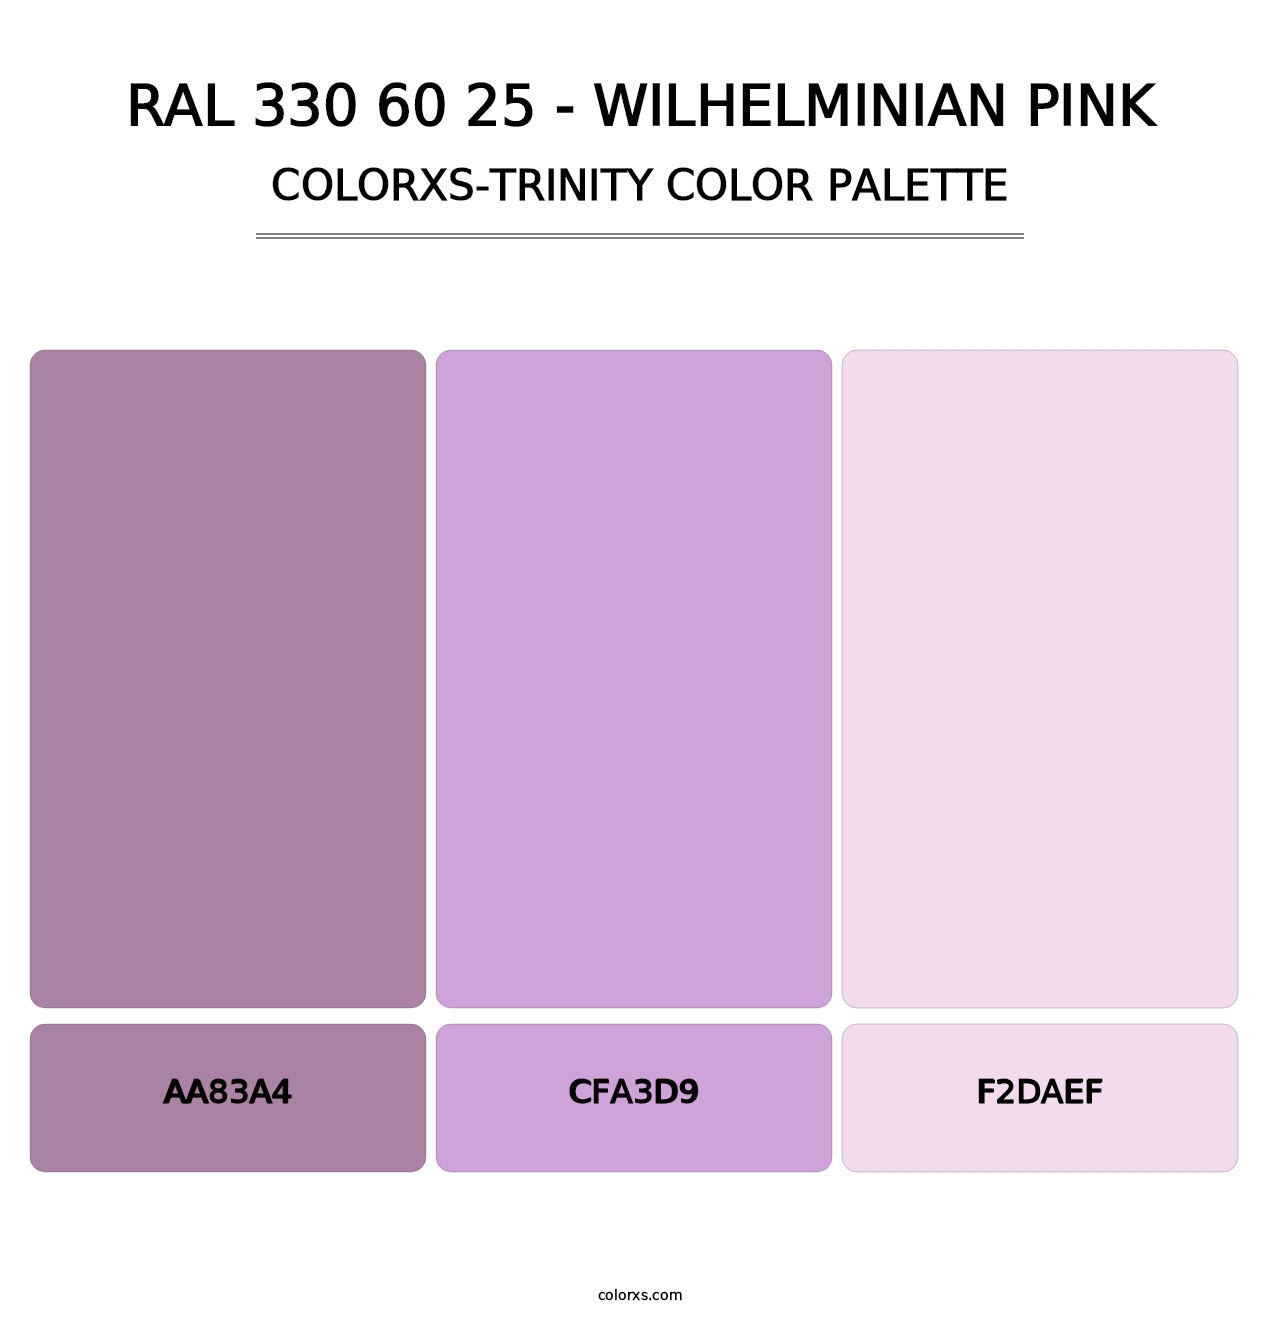 RAL 330 60 25 - Wilhelminian Pink - Colorxs Trinity Palette